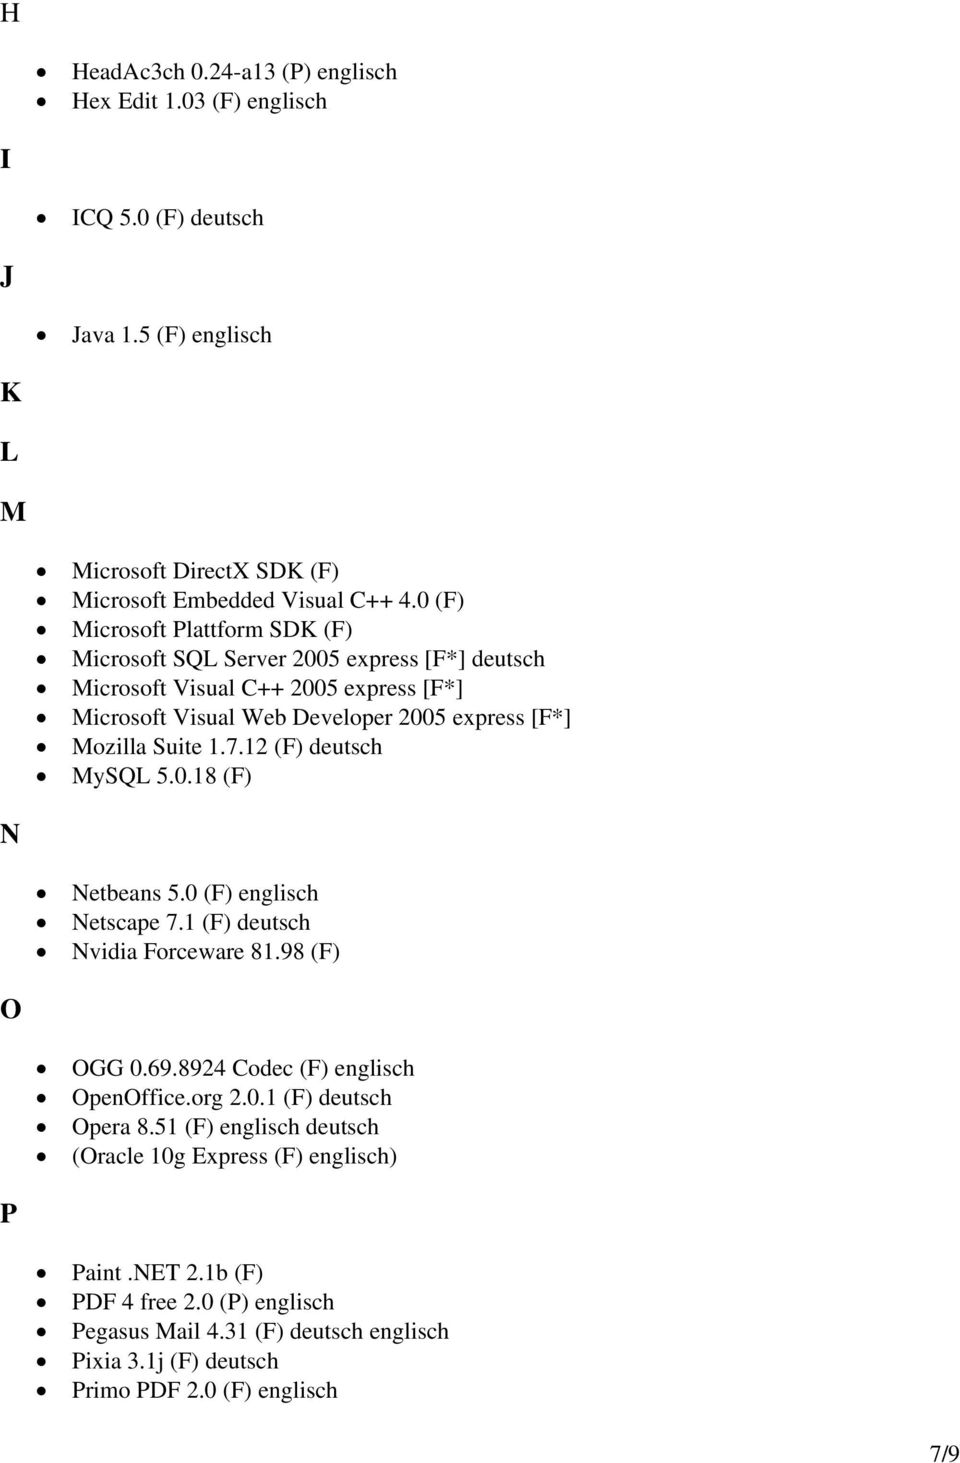 12 (F) deutsch MySQL 5.0.18 (F) N Netbeans 5.0 (F) englisch Netscape 7.1 (F) deutsch Nvidia Forceware 81.98 (F) O OGG 0.69.8924 Codec (F) englisch OpenOffice.org 2.0.1 (F) deutsch Opera 8.